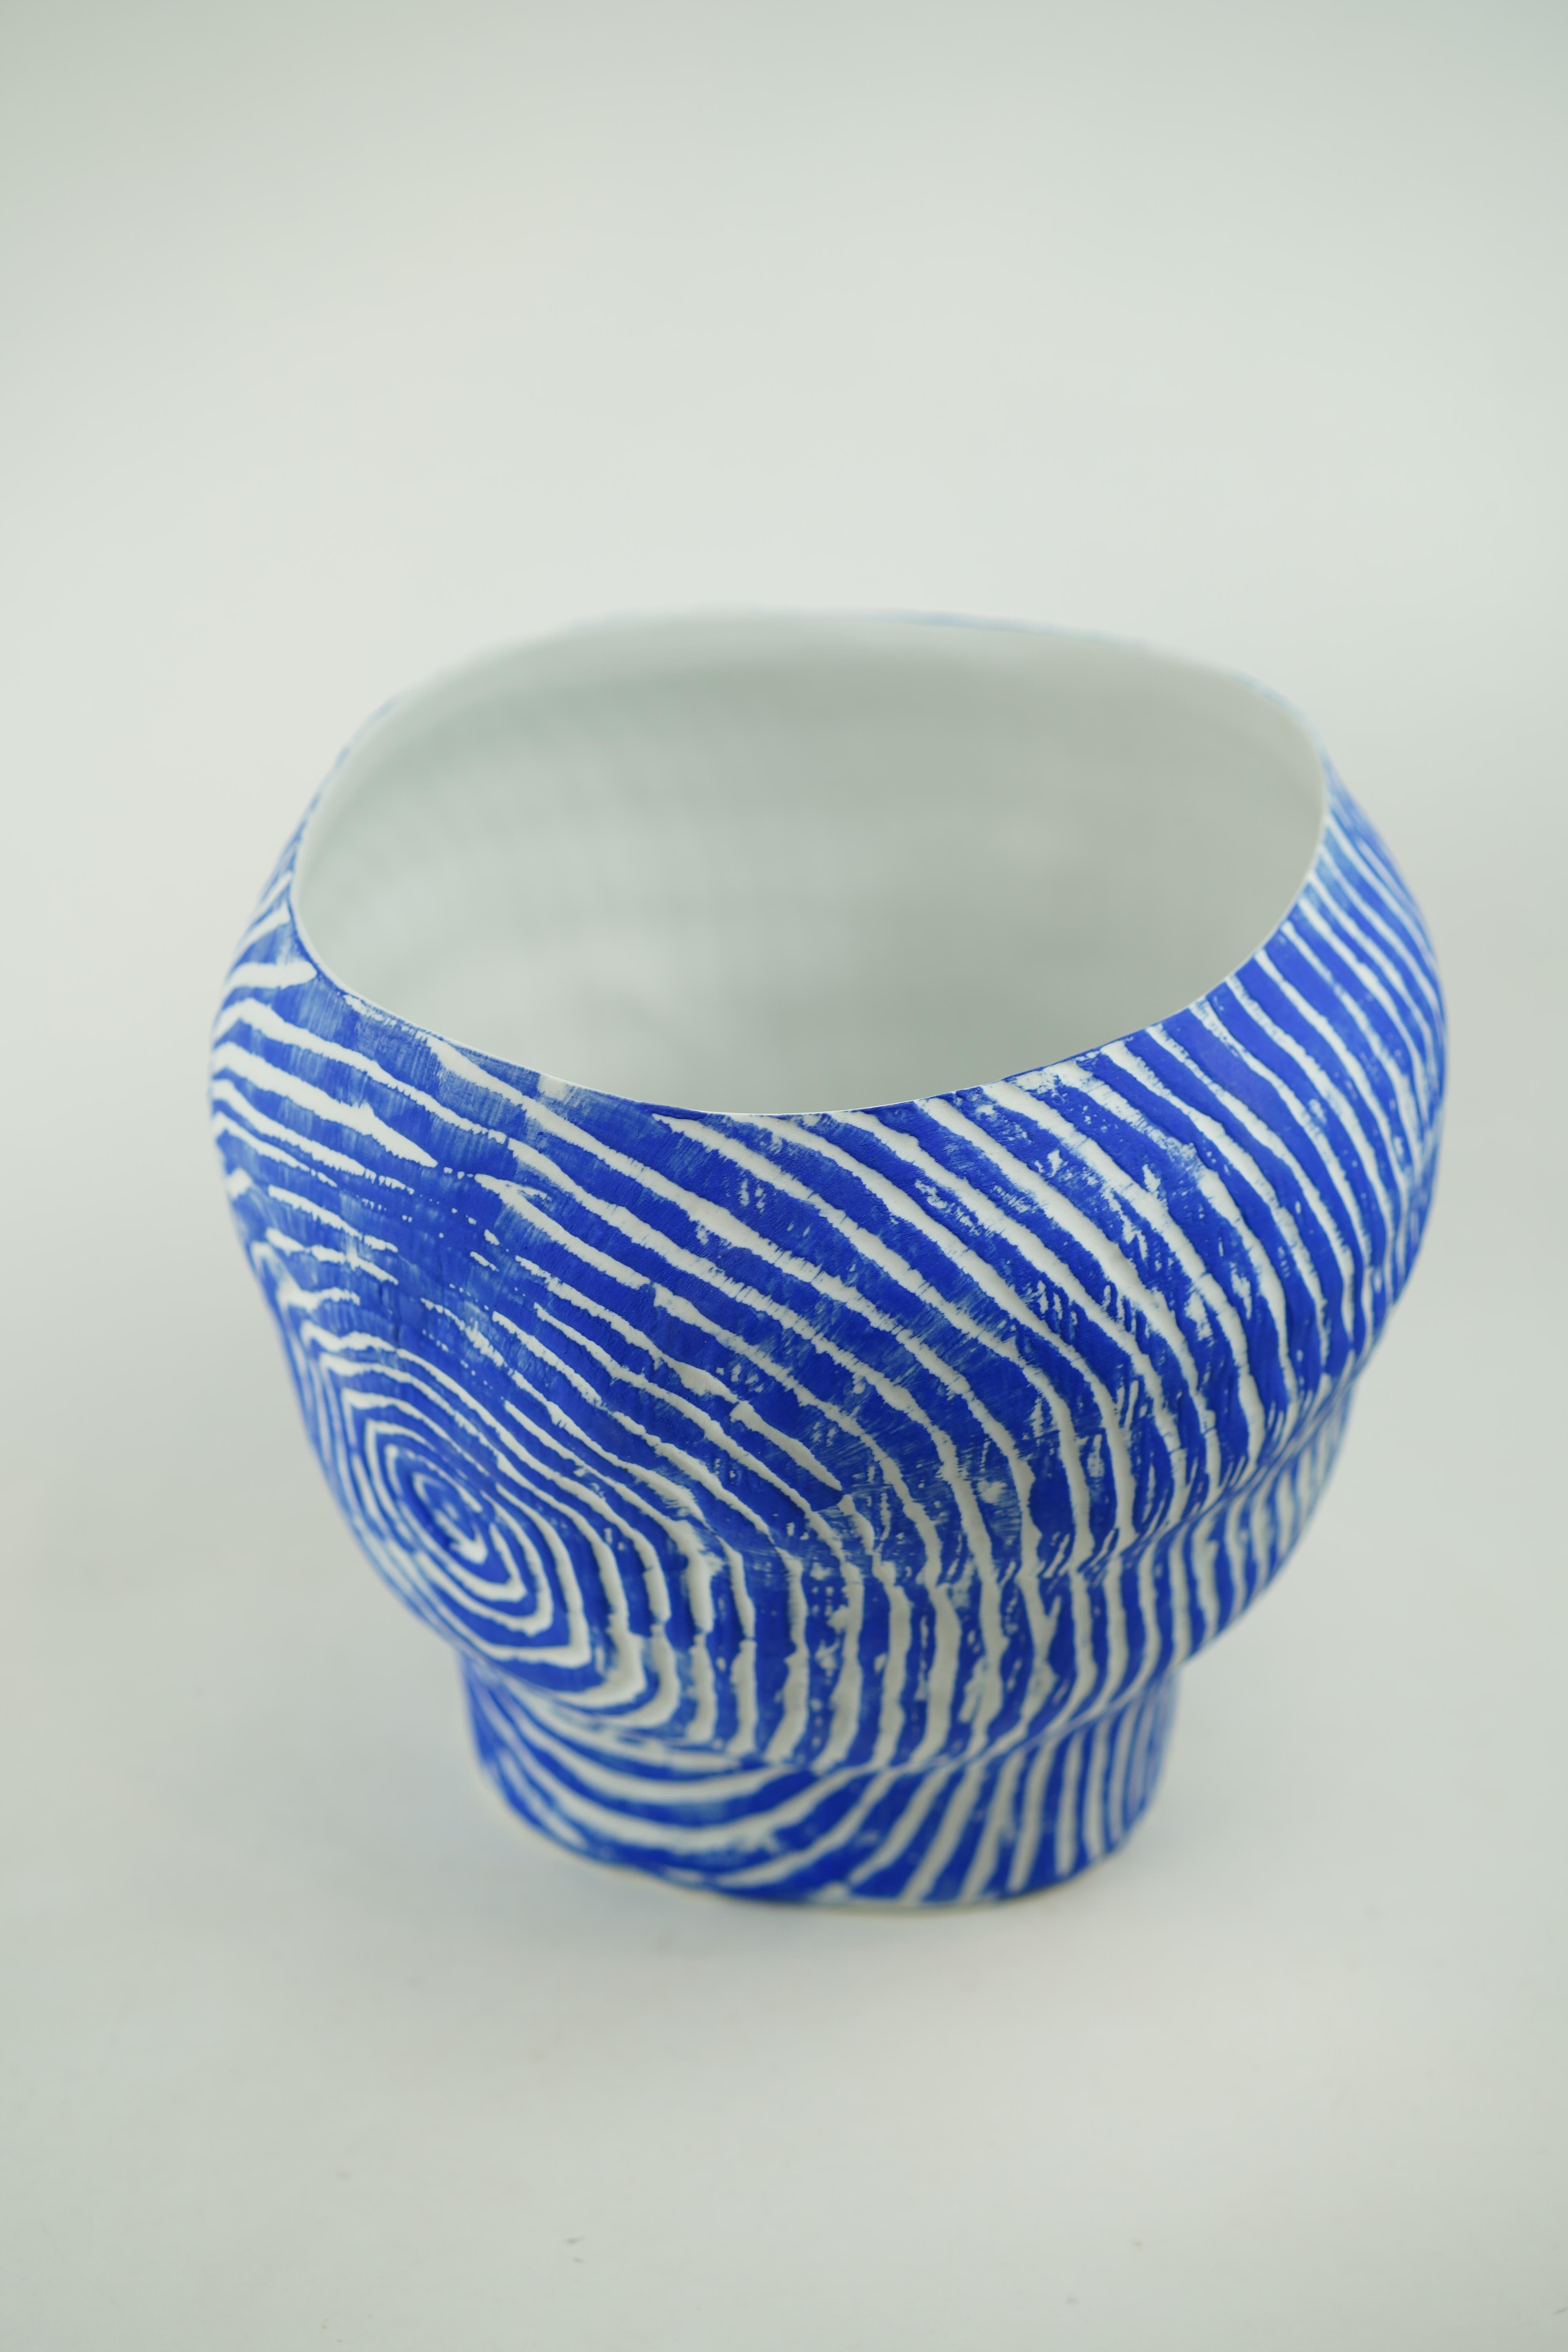 Wabi Sabi Awakening Spiral Vase, Available in Blue or Black For Sale 3